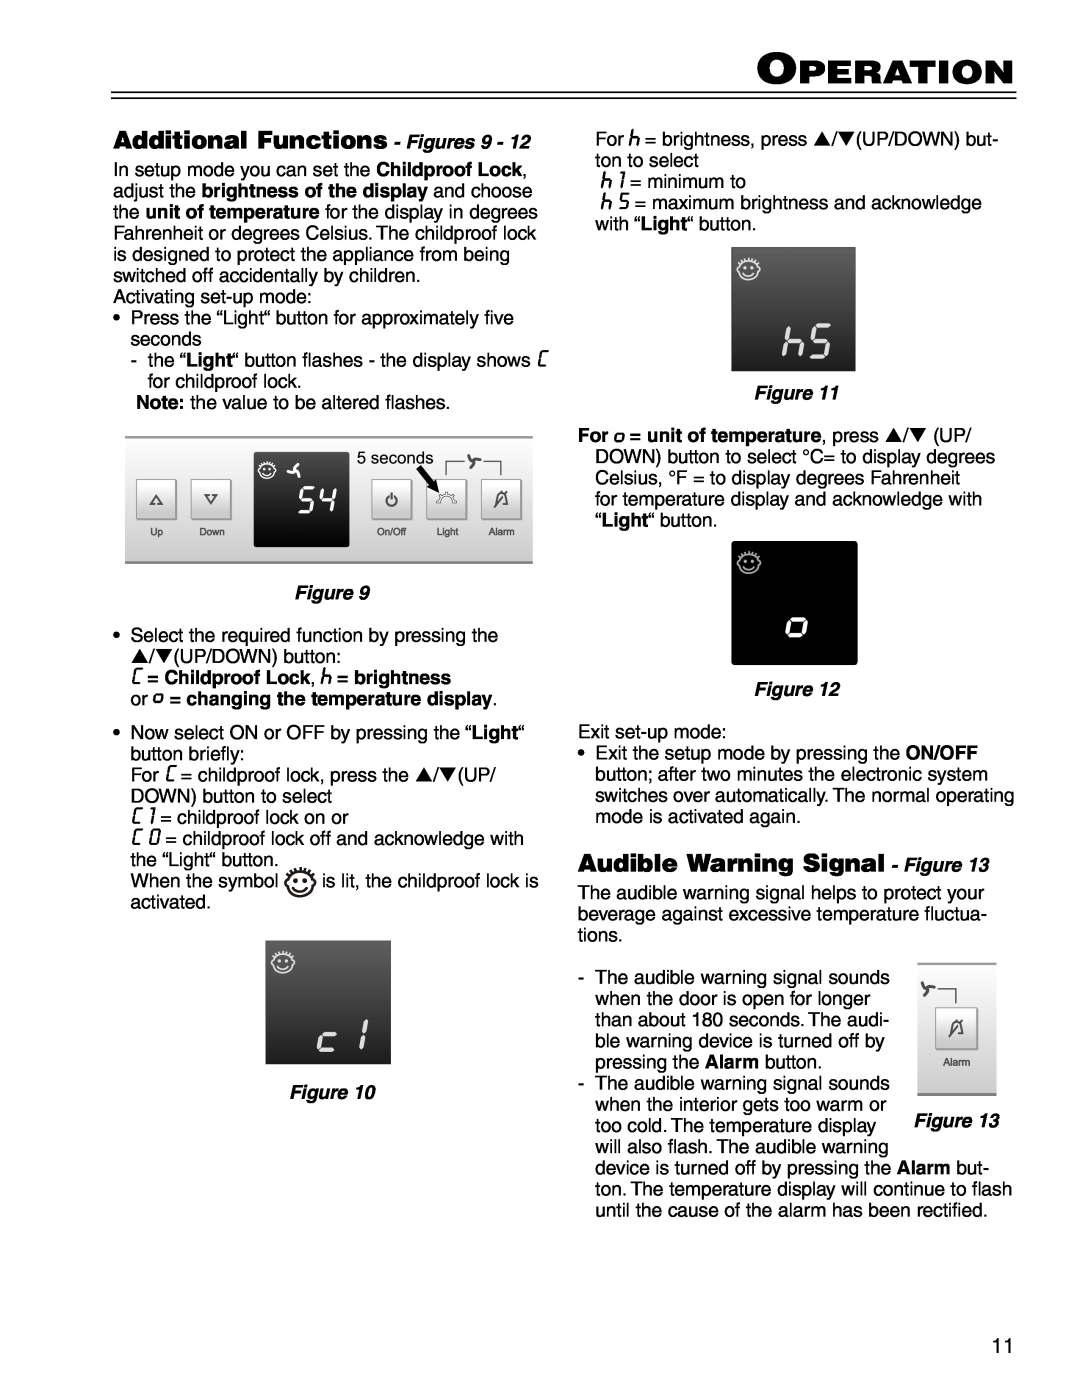 Liebherr RU500 manual Additional Functions - Figures, Audible Warning Signal - Figure, Operation 